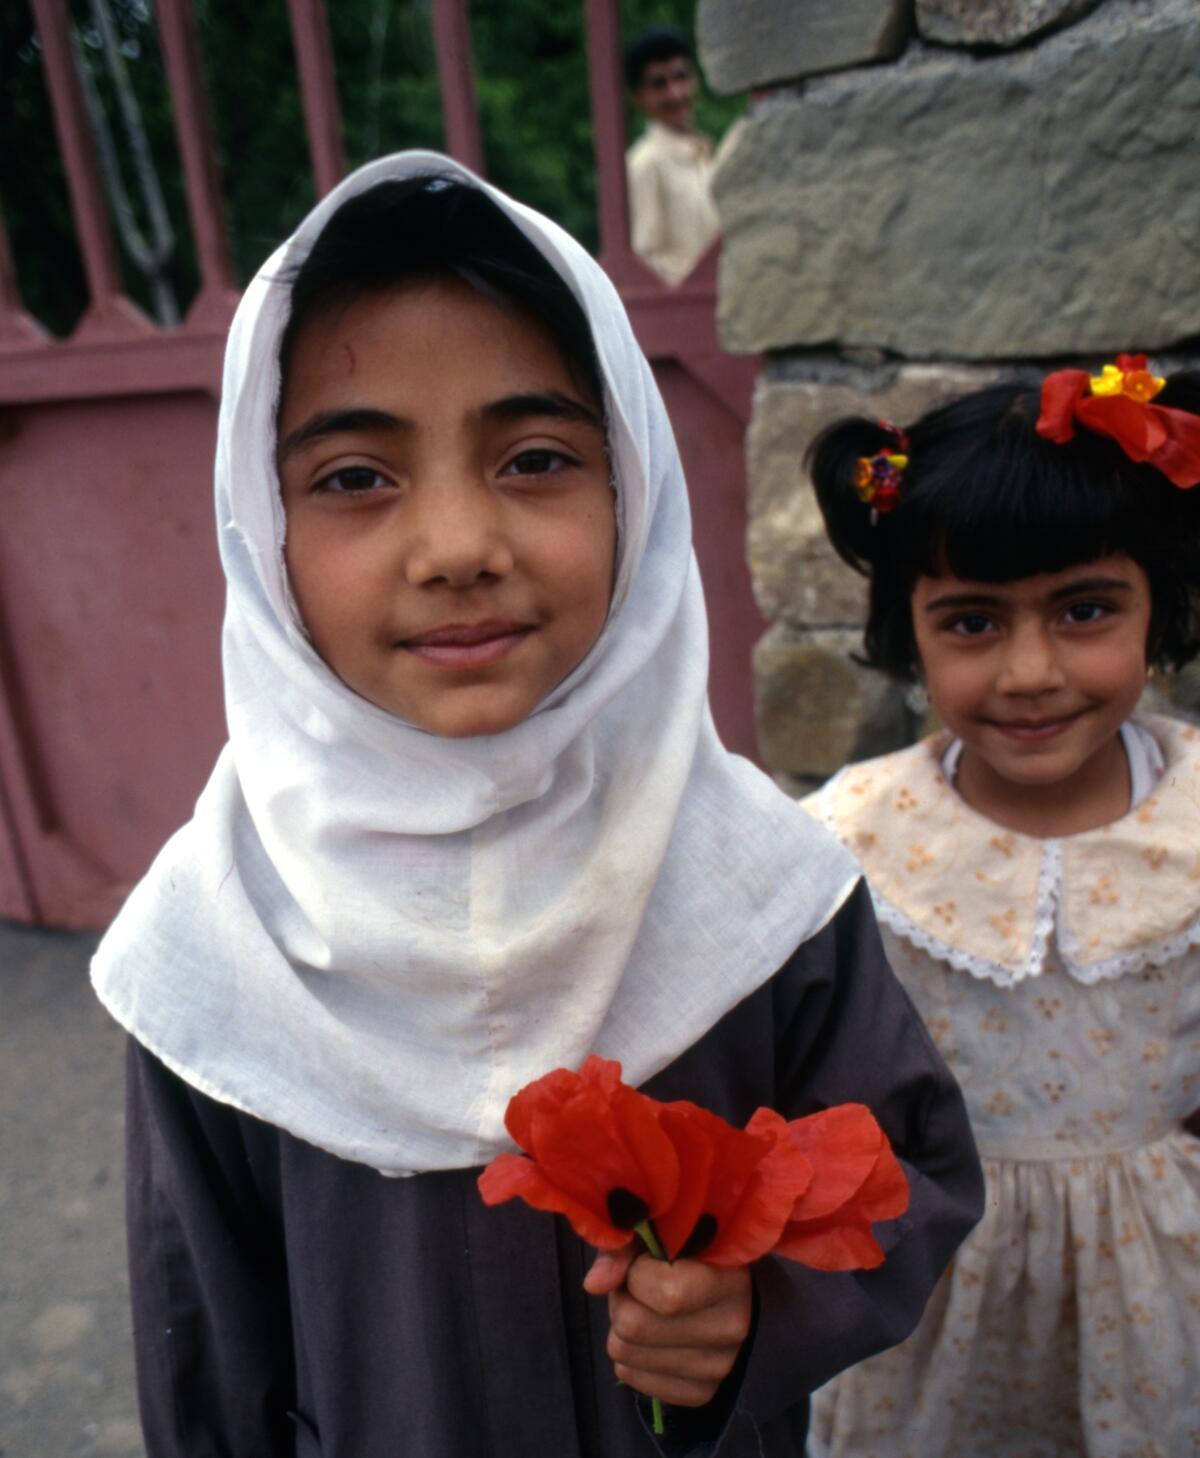 Schoolgirls greeted us south of Mashhad, bearing poppies. Iran, 1998.